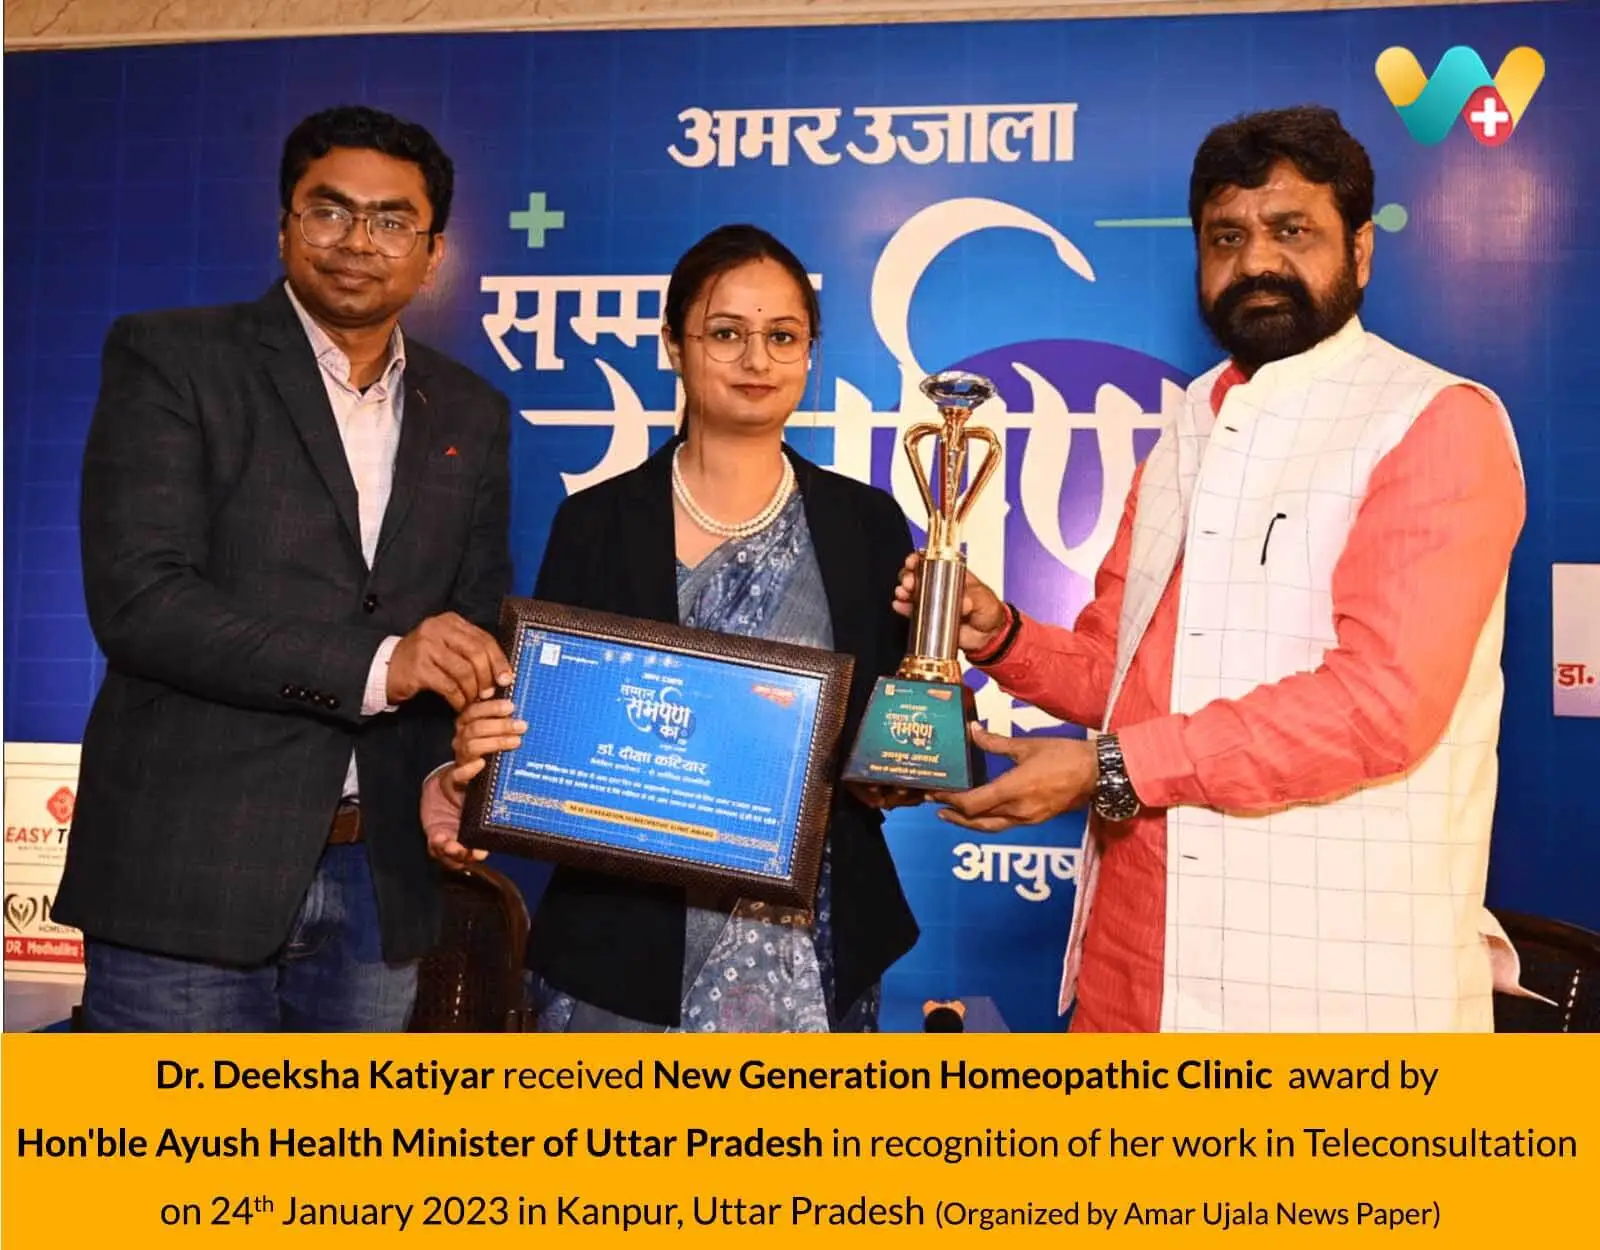 Dr. Deeksha Katiyar Receiving Award from Ayush Minister of Uttar Pradesh